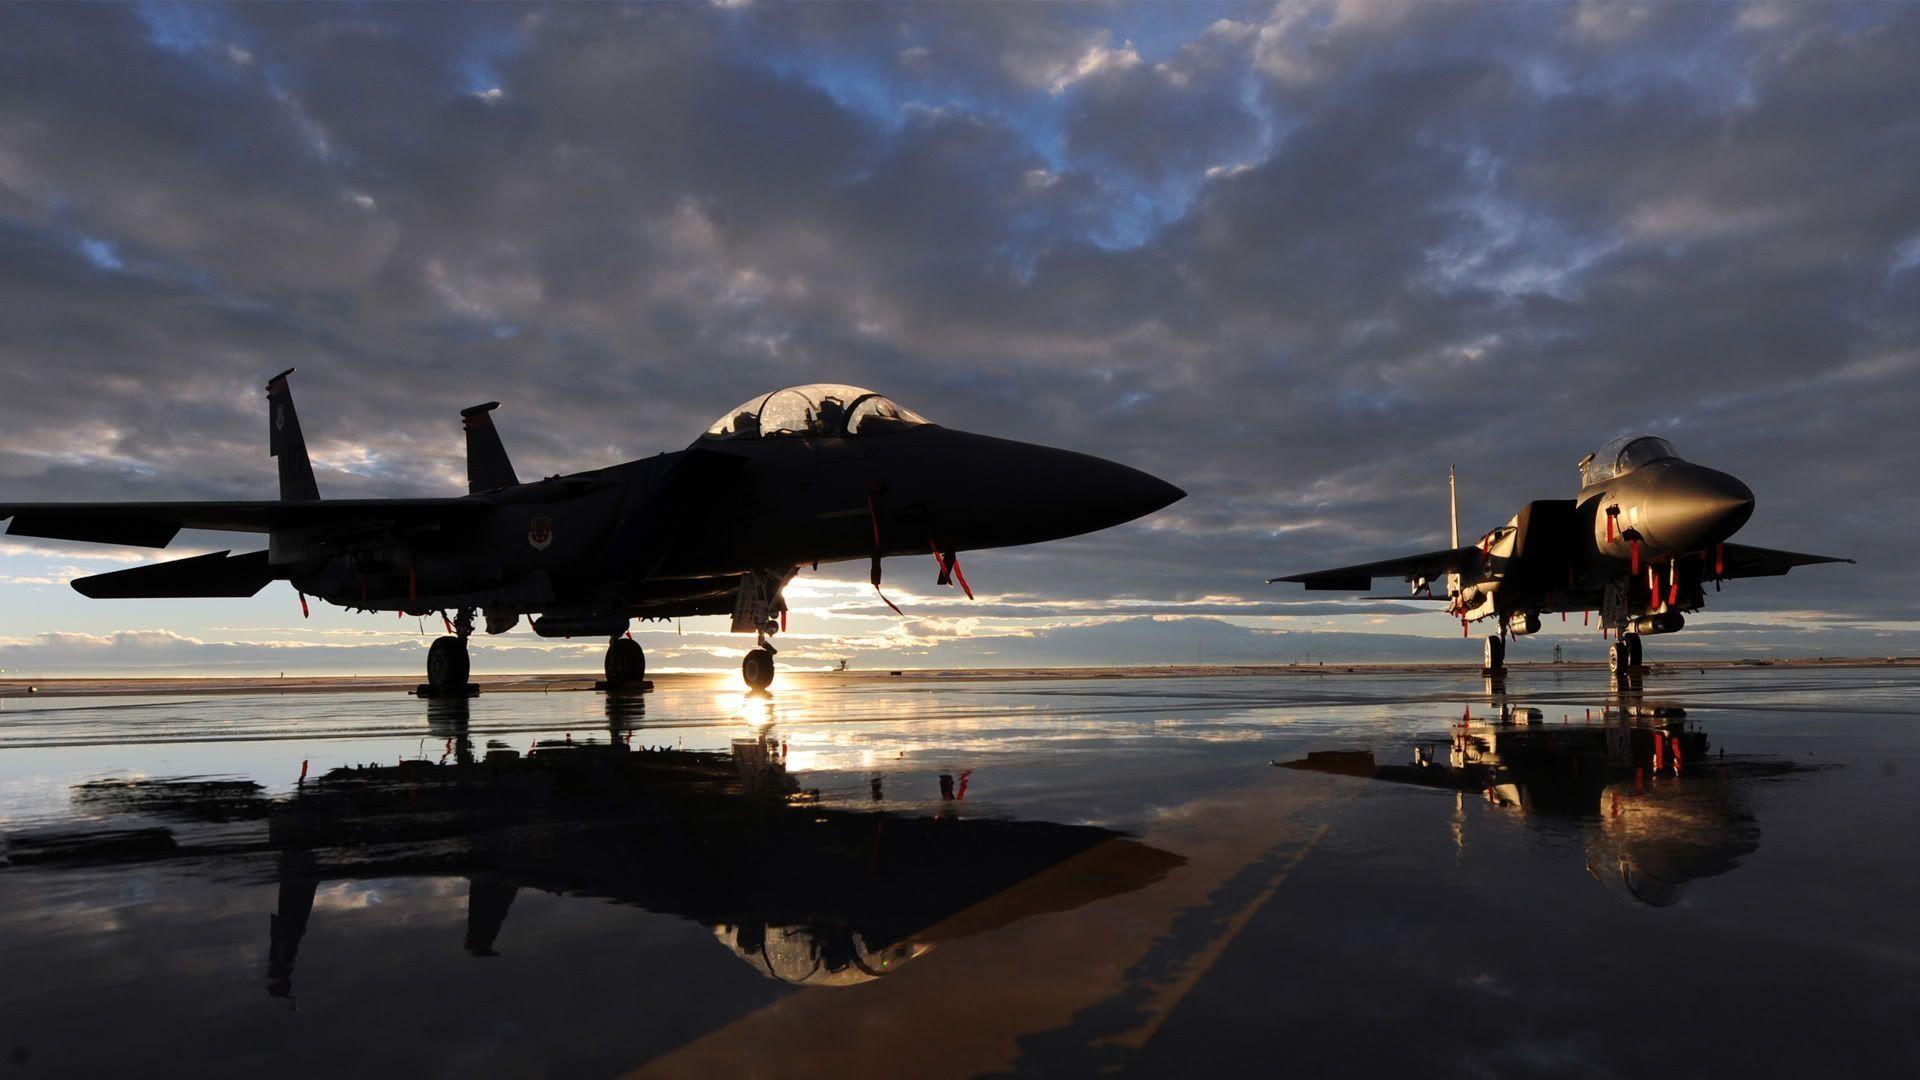 500 Fighter Jet Pictures  Download Free Images on Unsplash